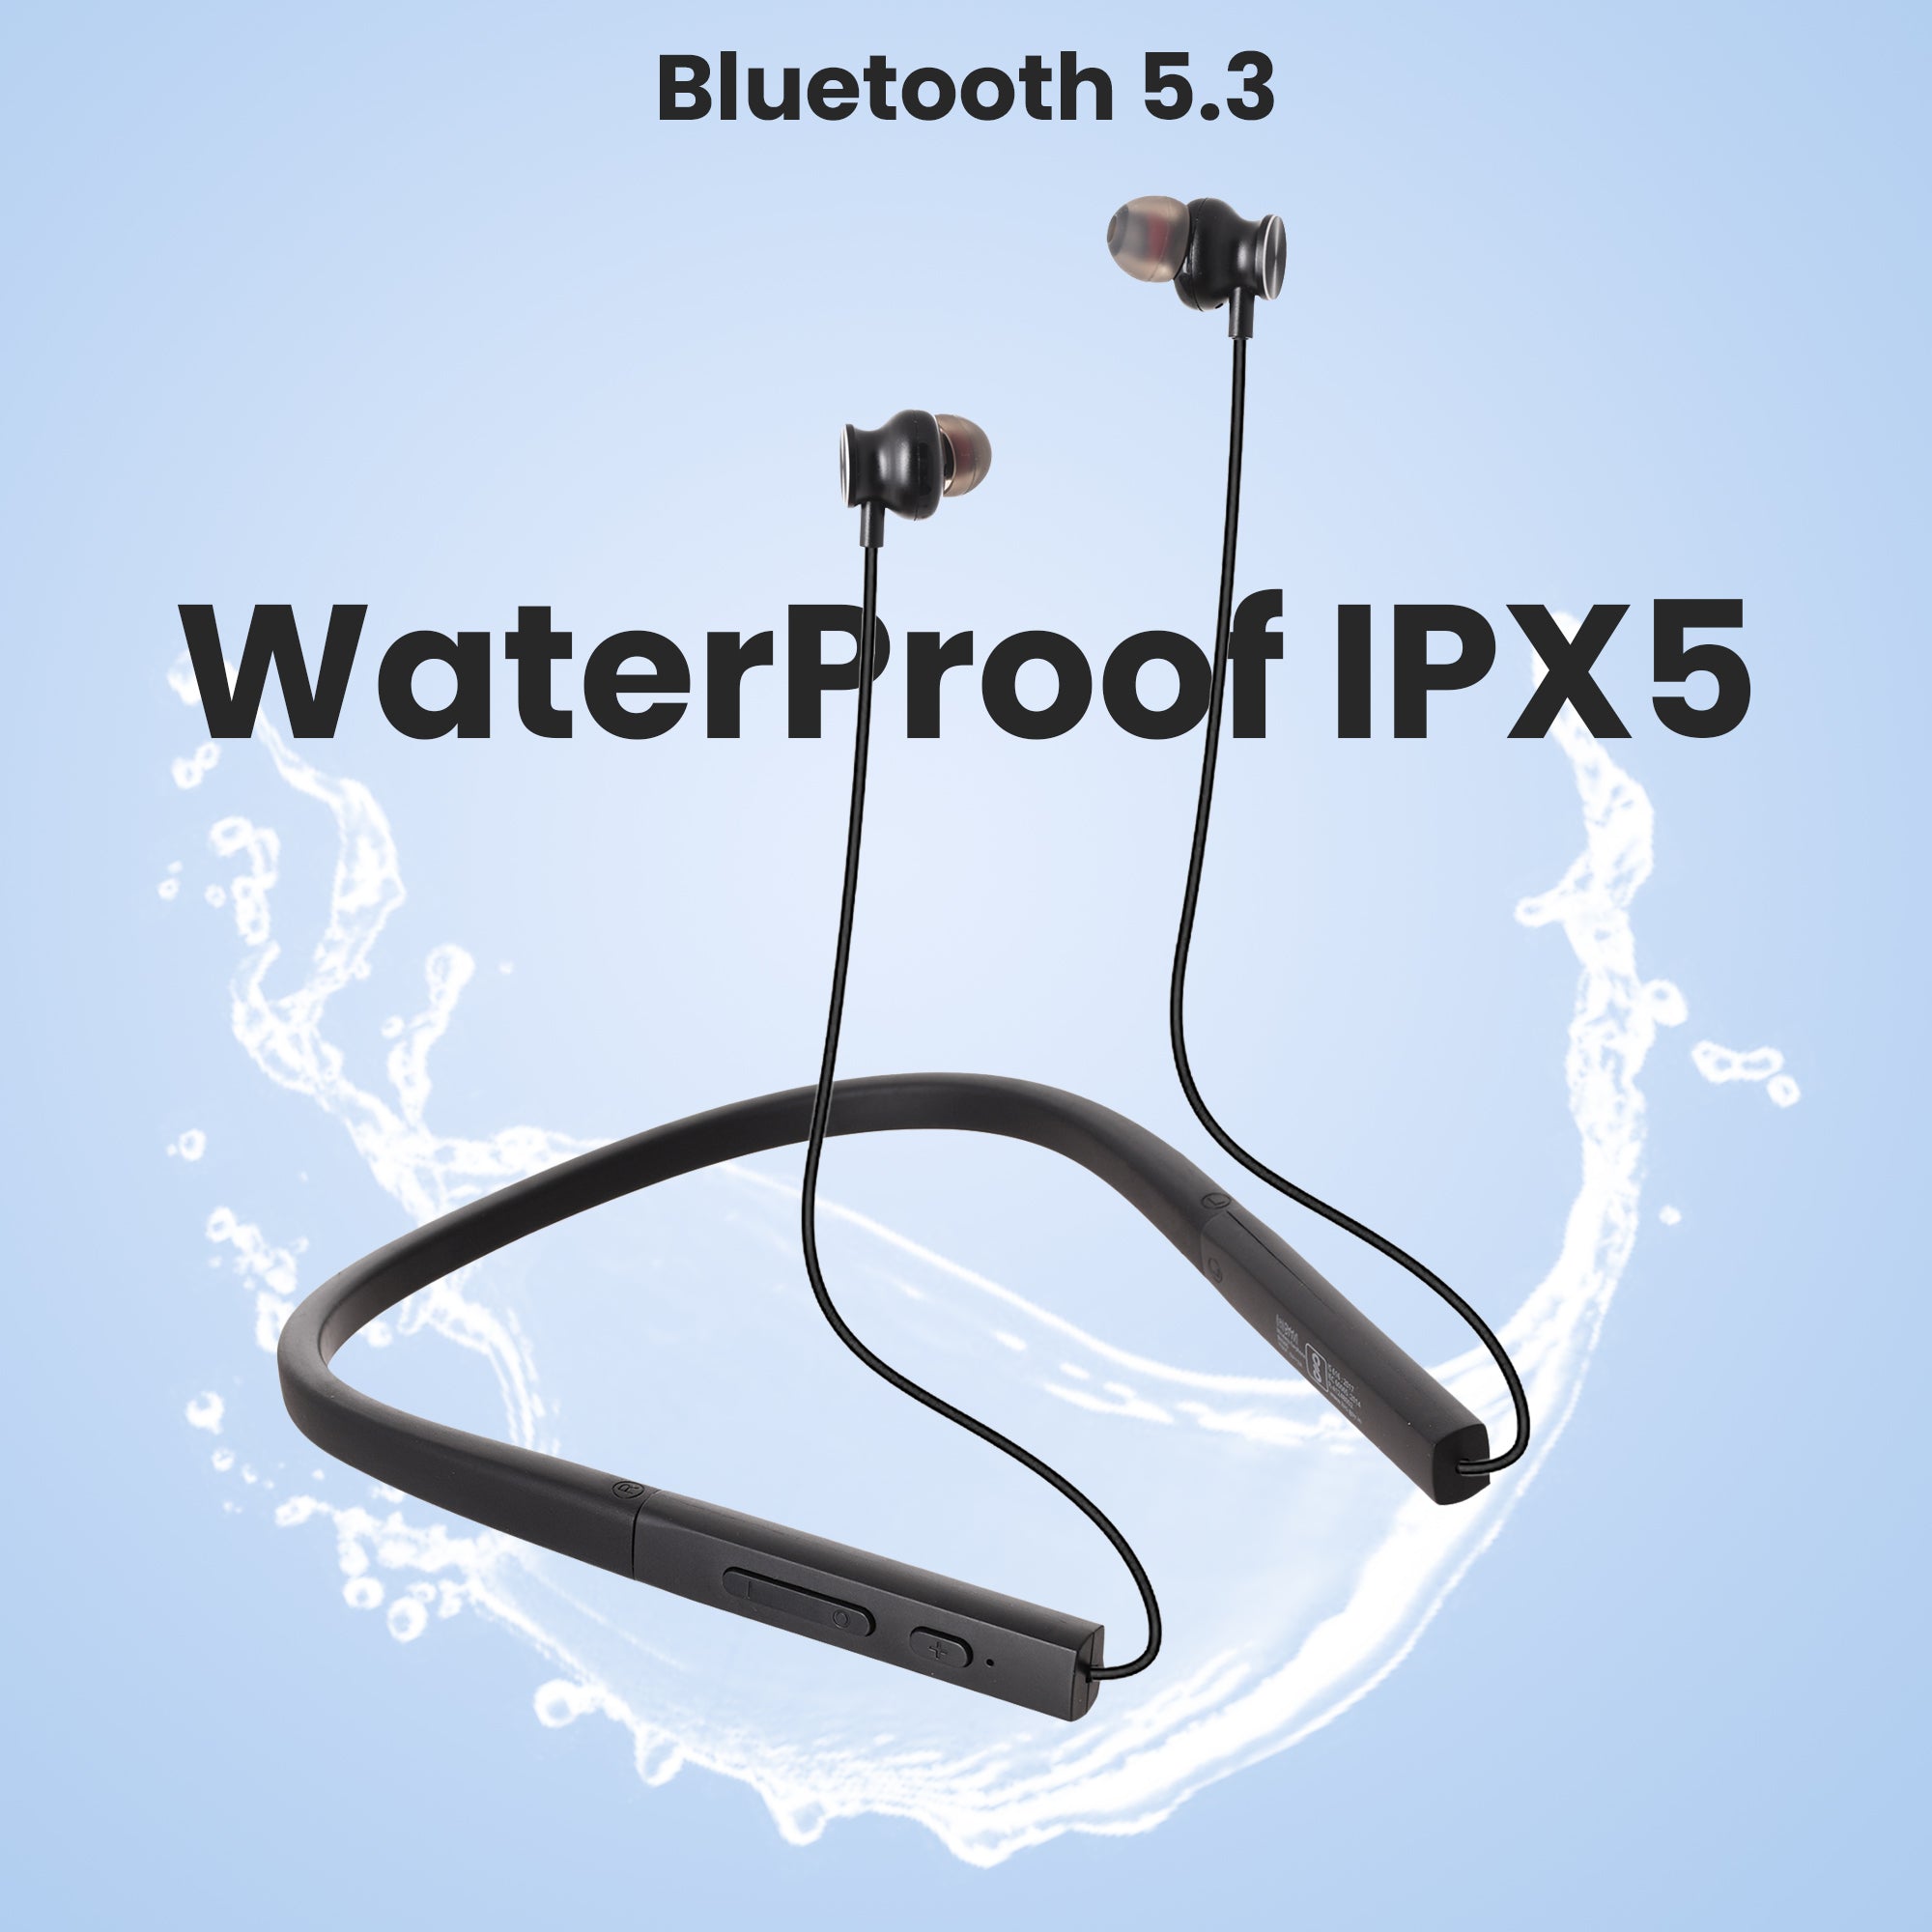 waterproof feature of BN 205